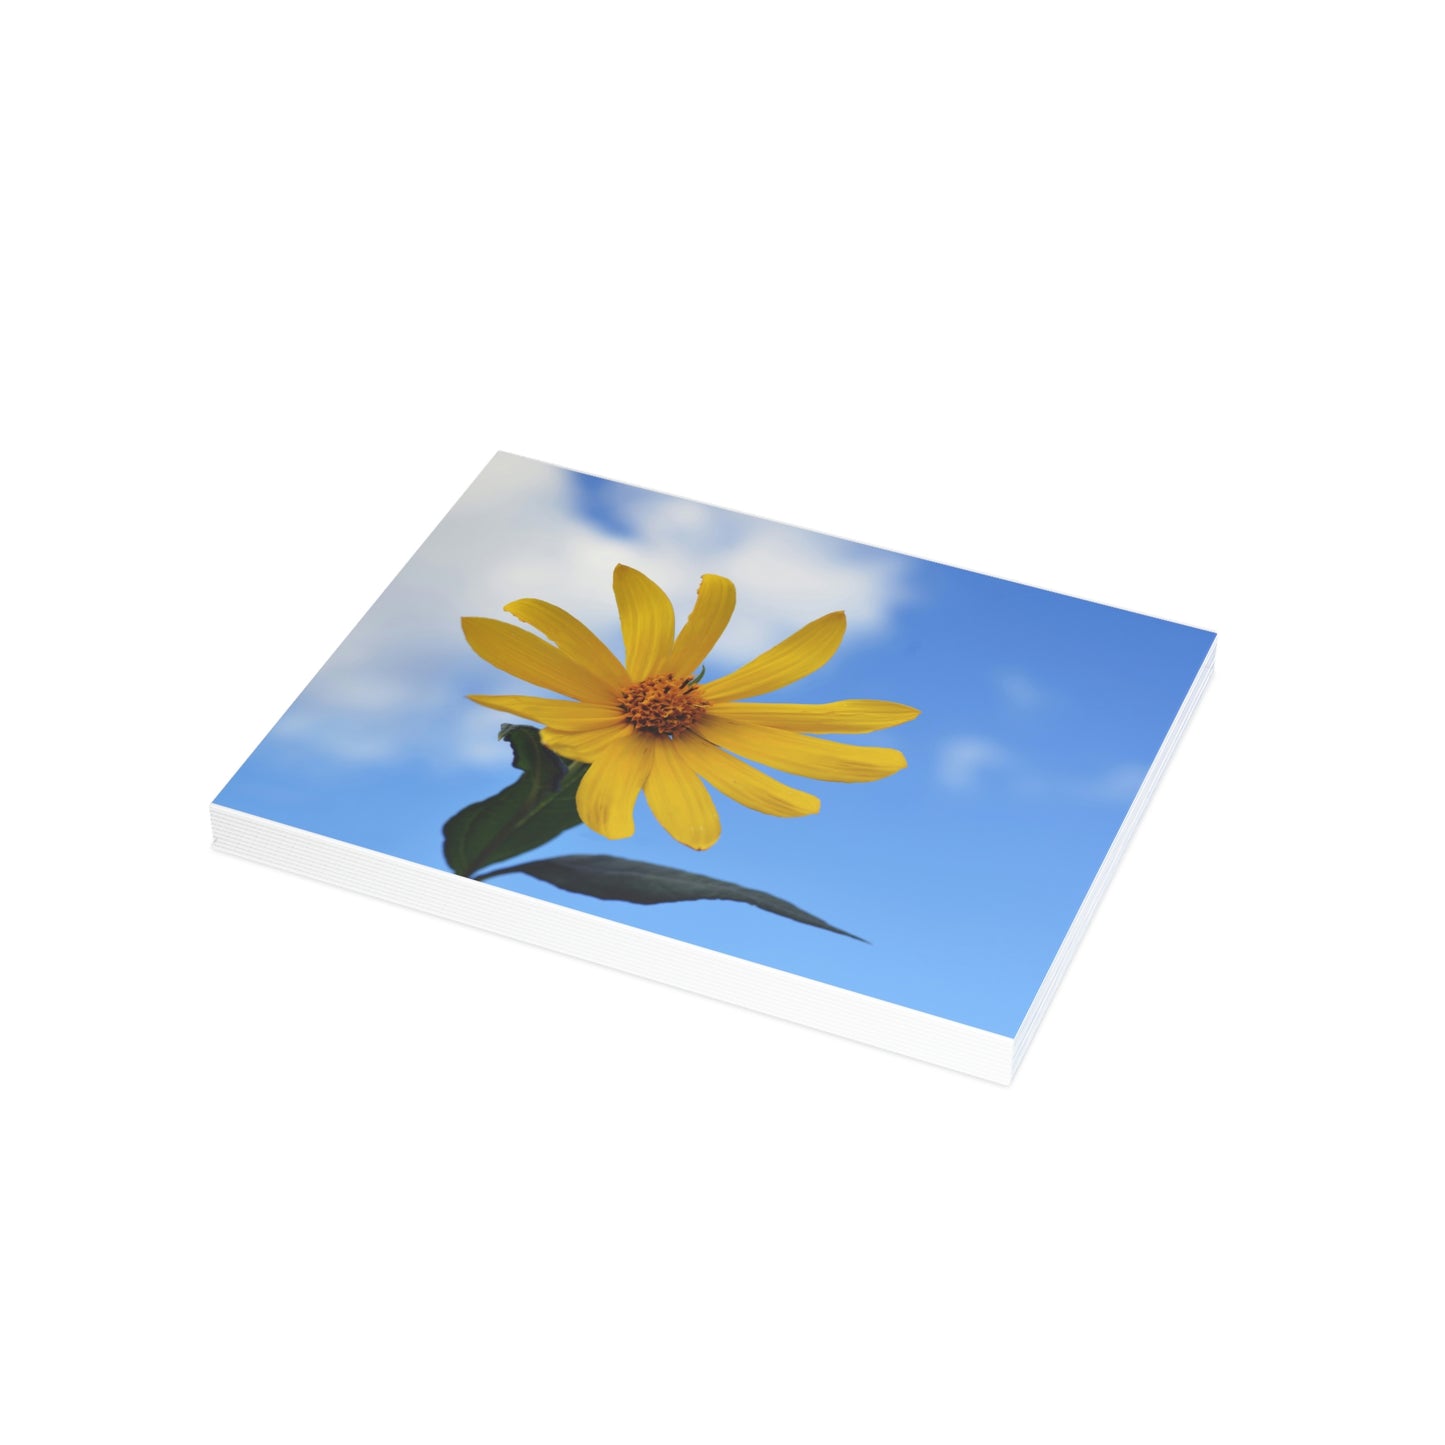 Flowers 32 Greeting Card Bundles (envelopes not included)